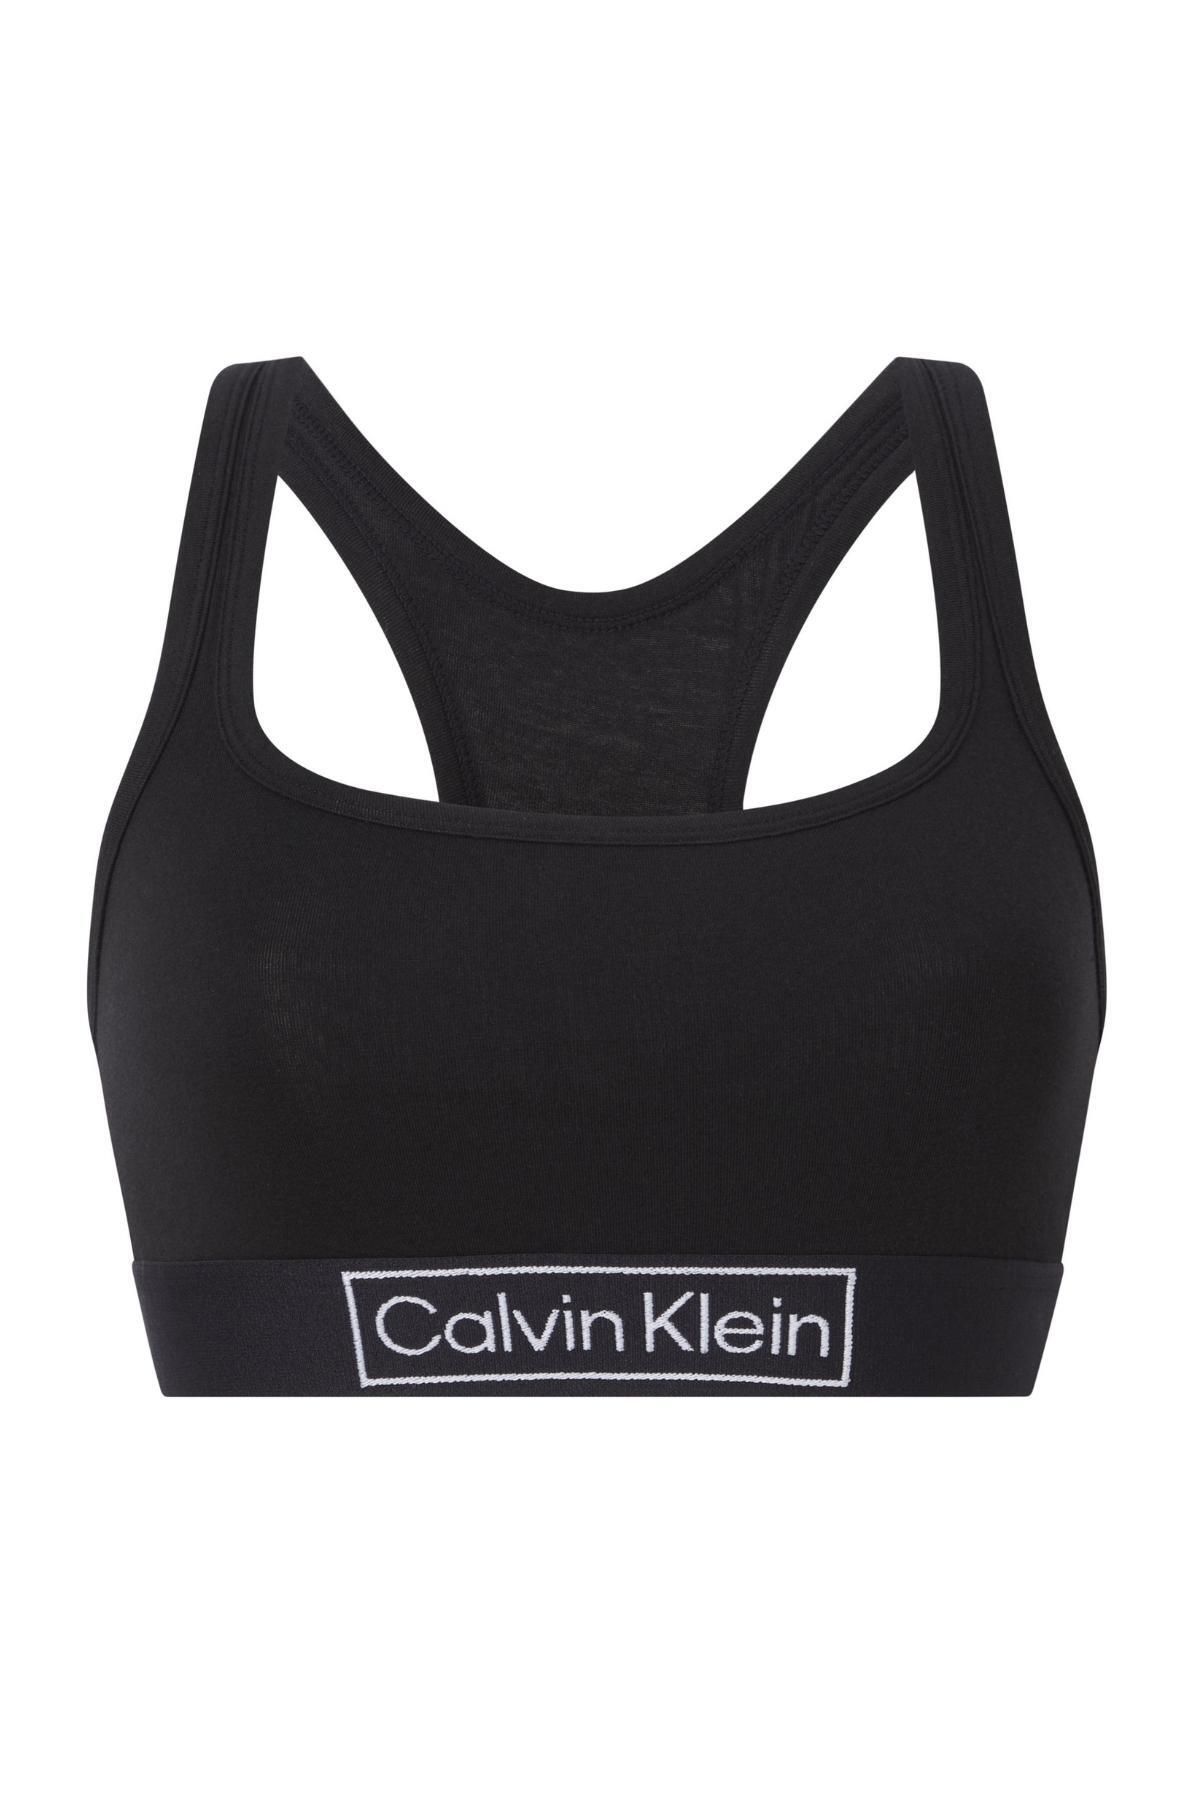 Calvin Klein Kadın Siyah Spor Sütyeni 000qf6768eub1-siyah